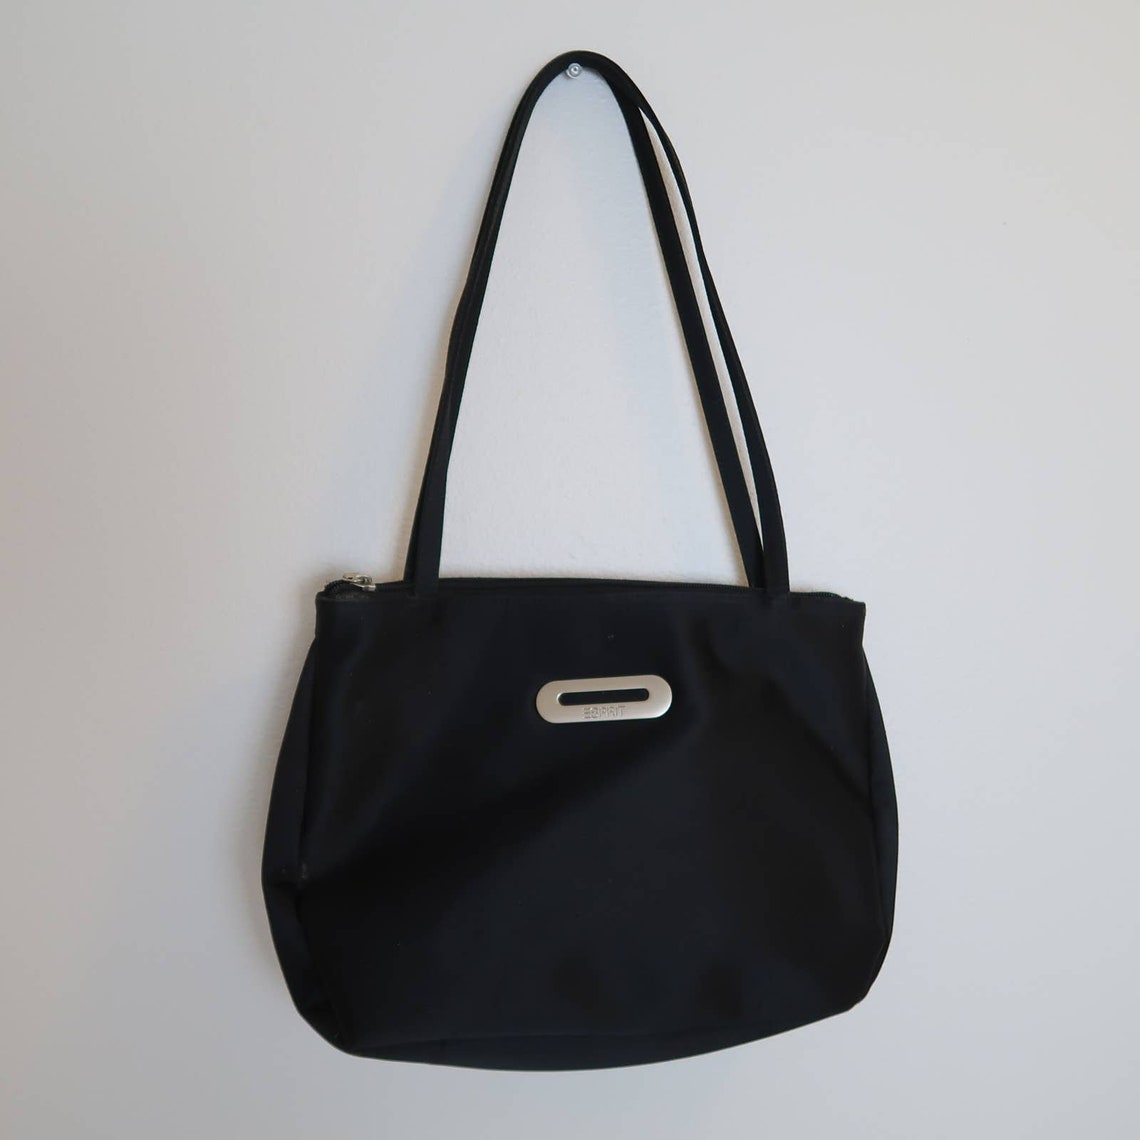 Vintage 90s Esprit black nylon tote bag purse | Etsy